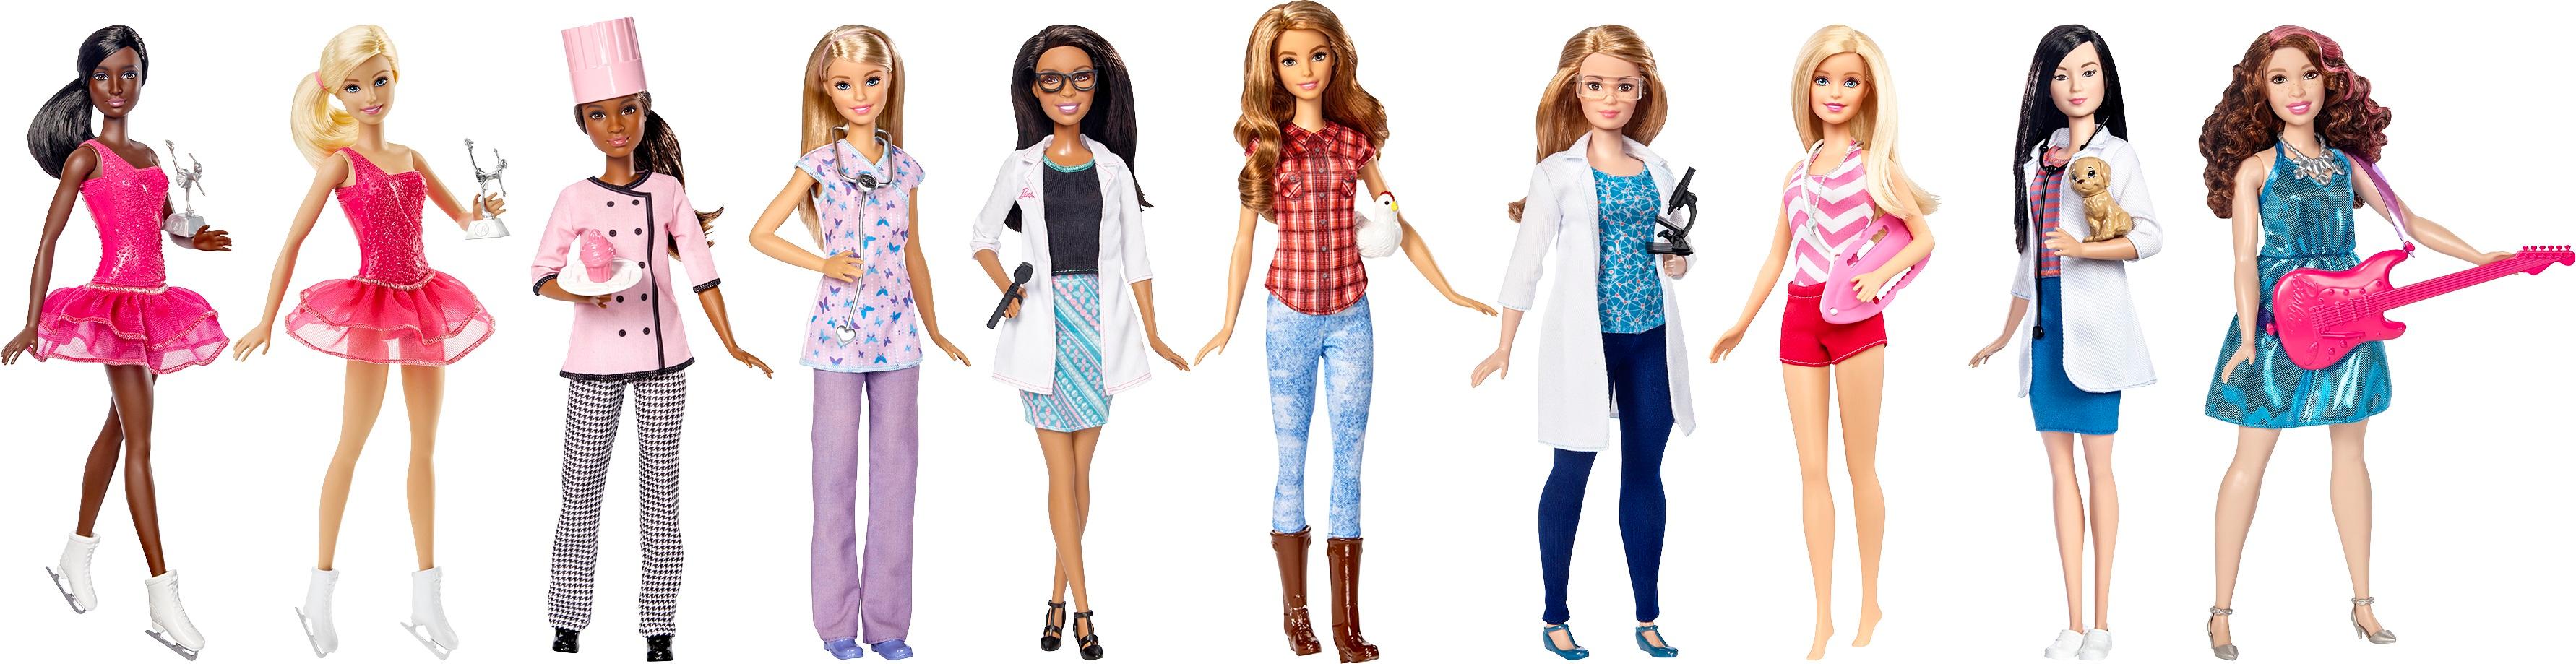 mattel-barbie-career-doll-styles-may-vary